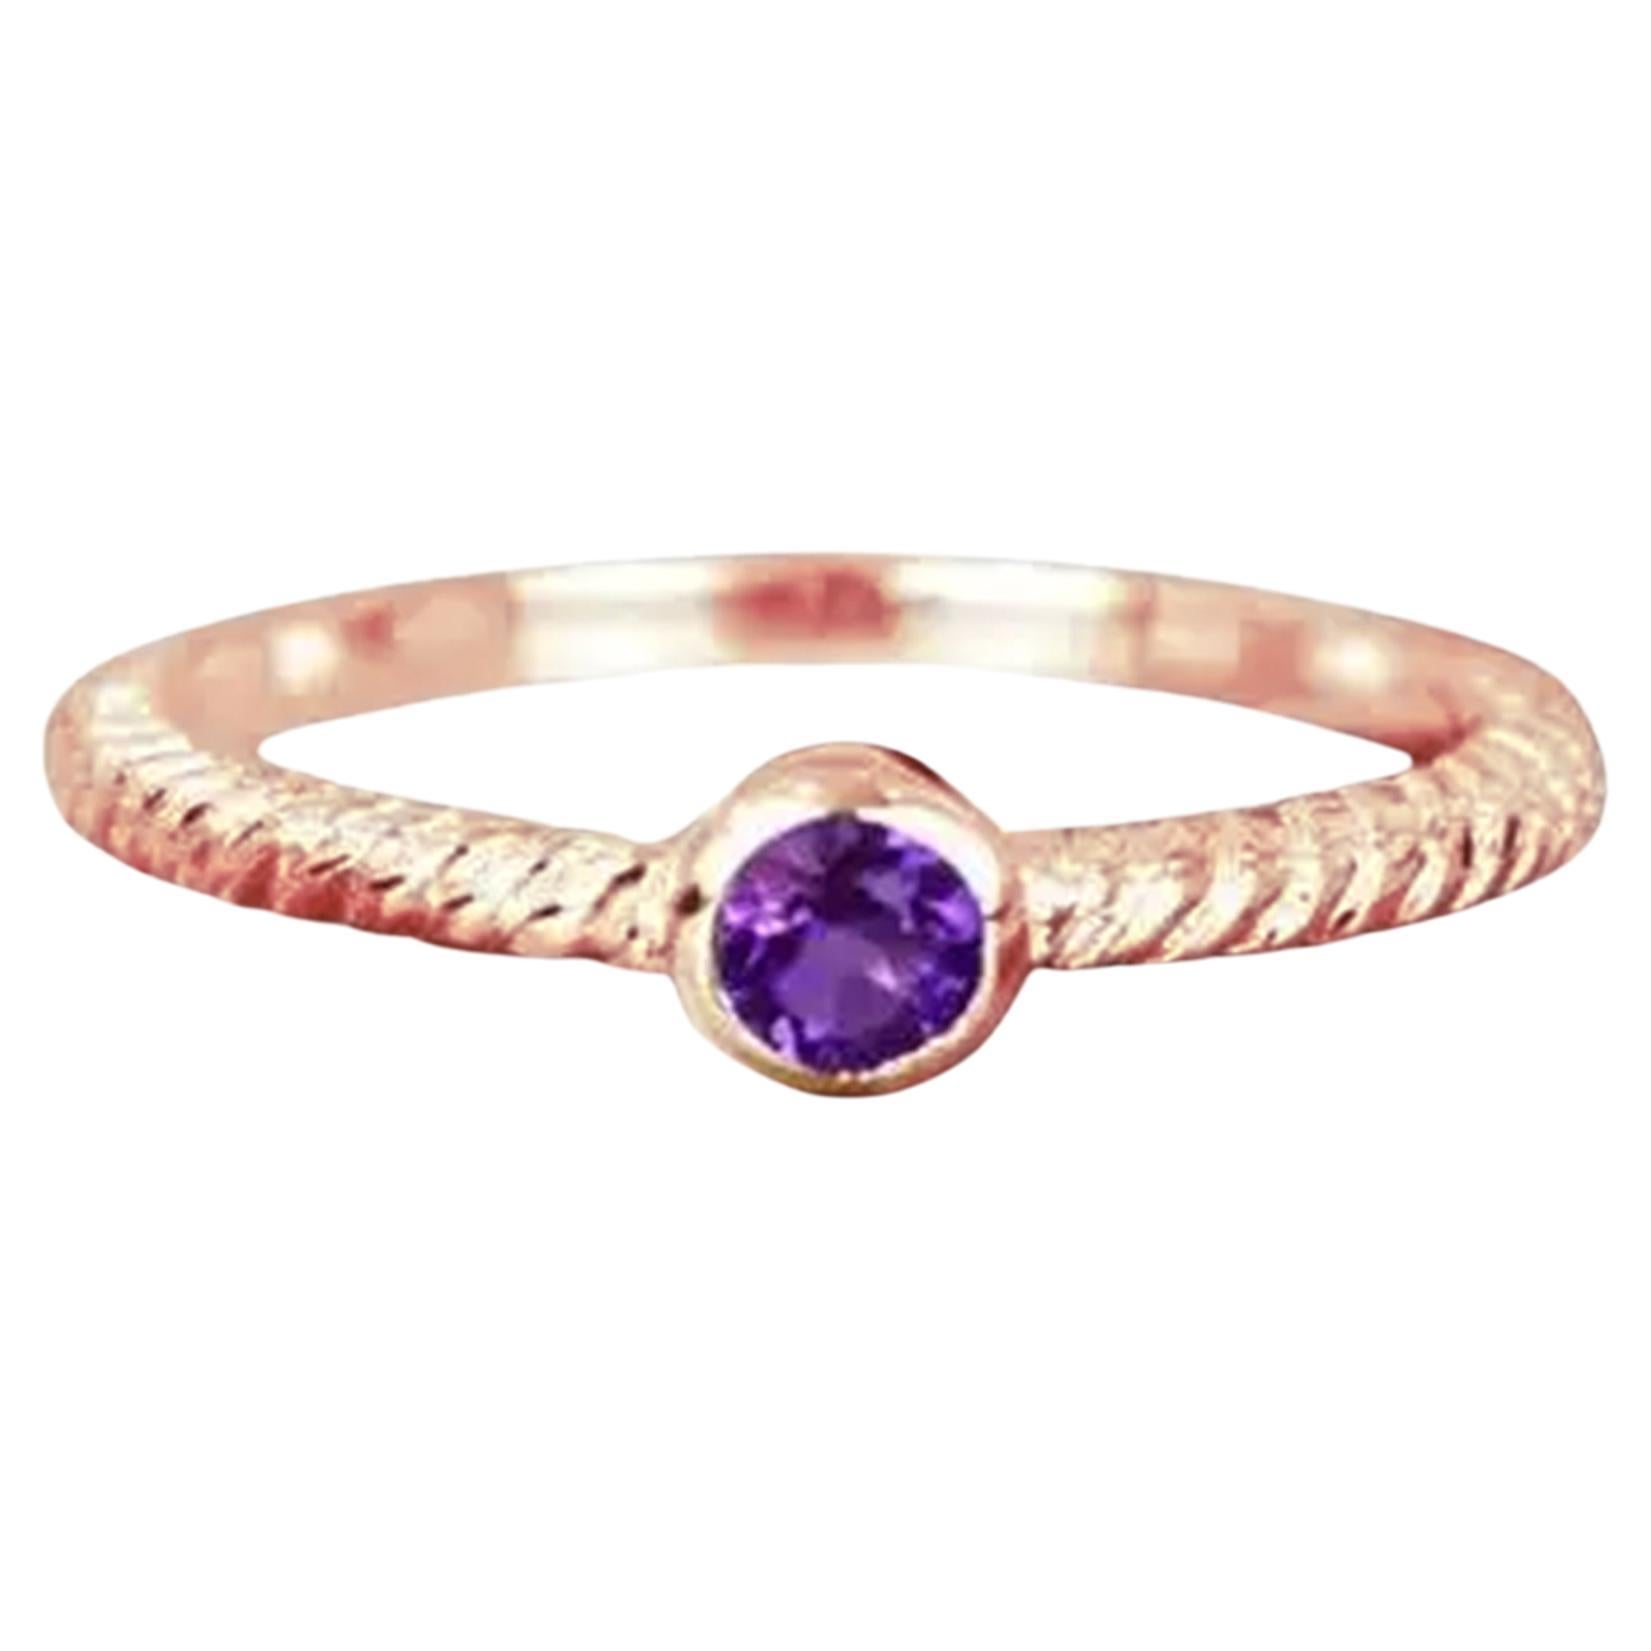 For Sale:  14k Gold Round Gemstone 3.5mm Round Gemstone Ring Birthstone Ring Stackable Ring